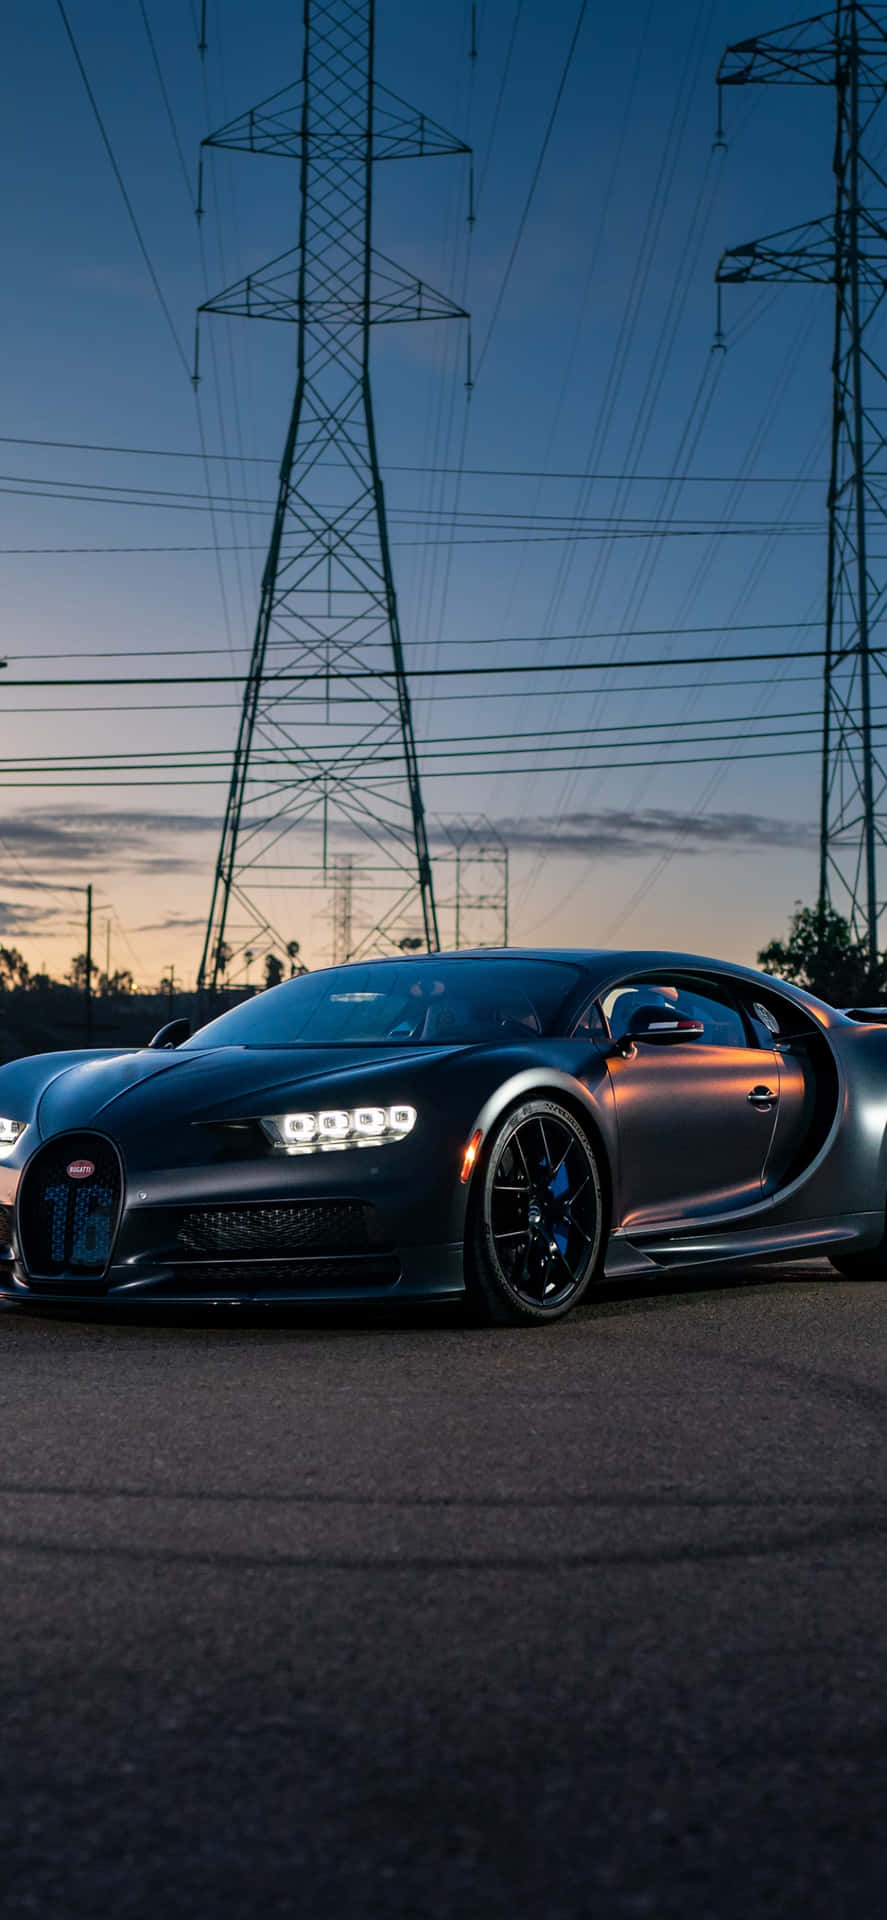 Bugattibakgrundsbild.